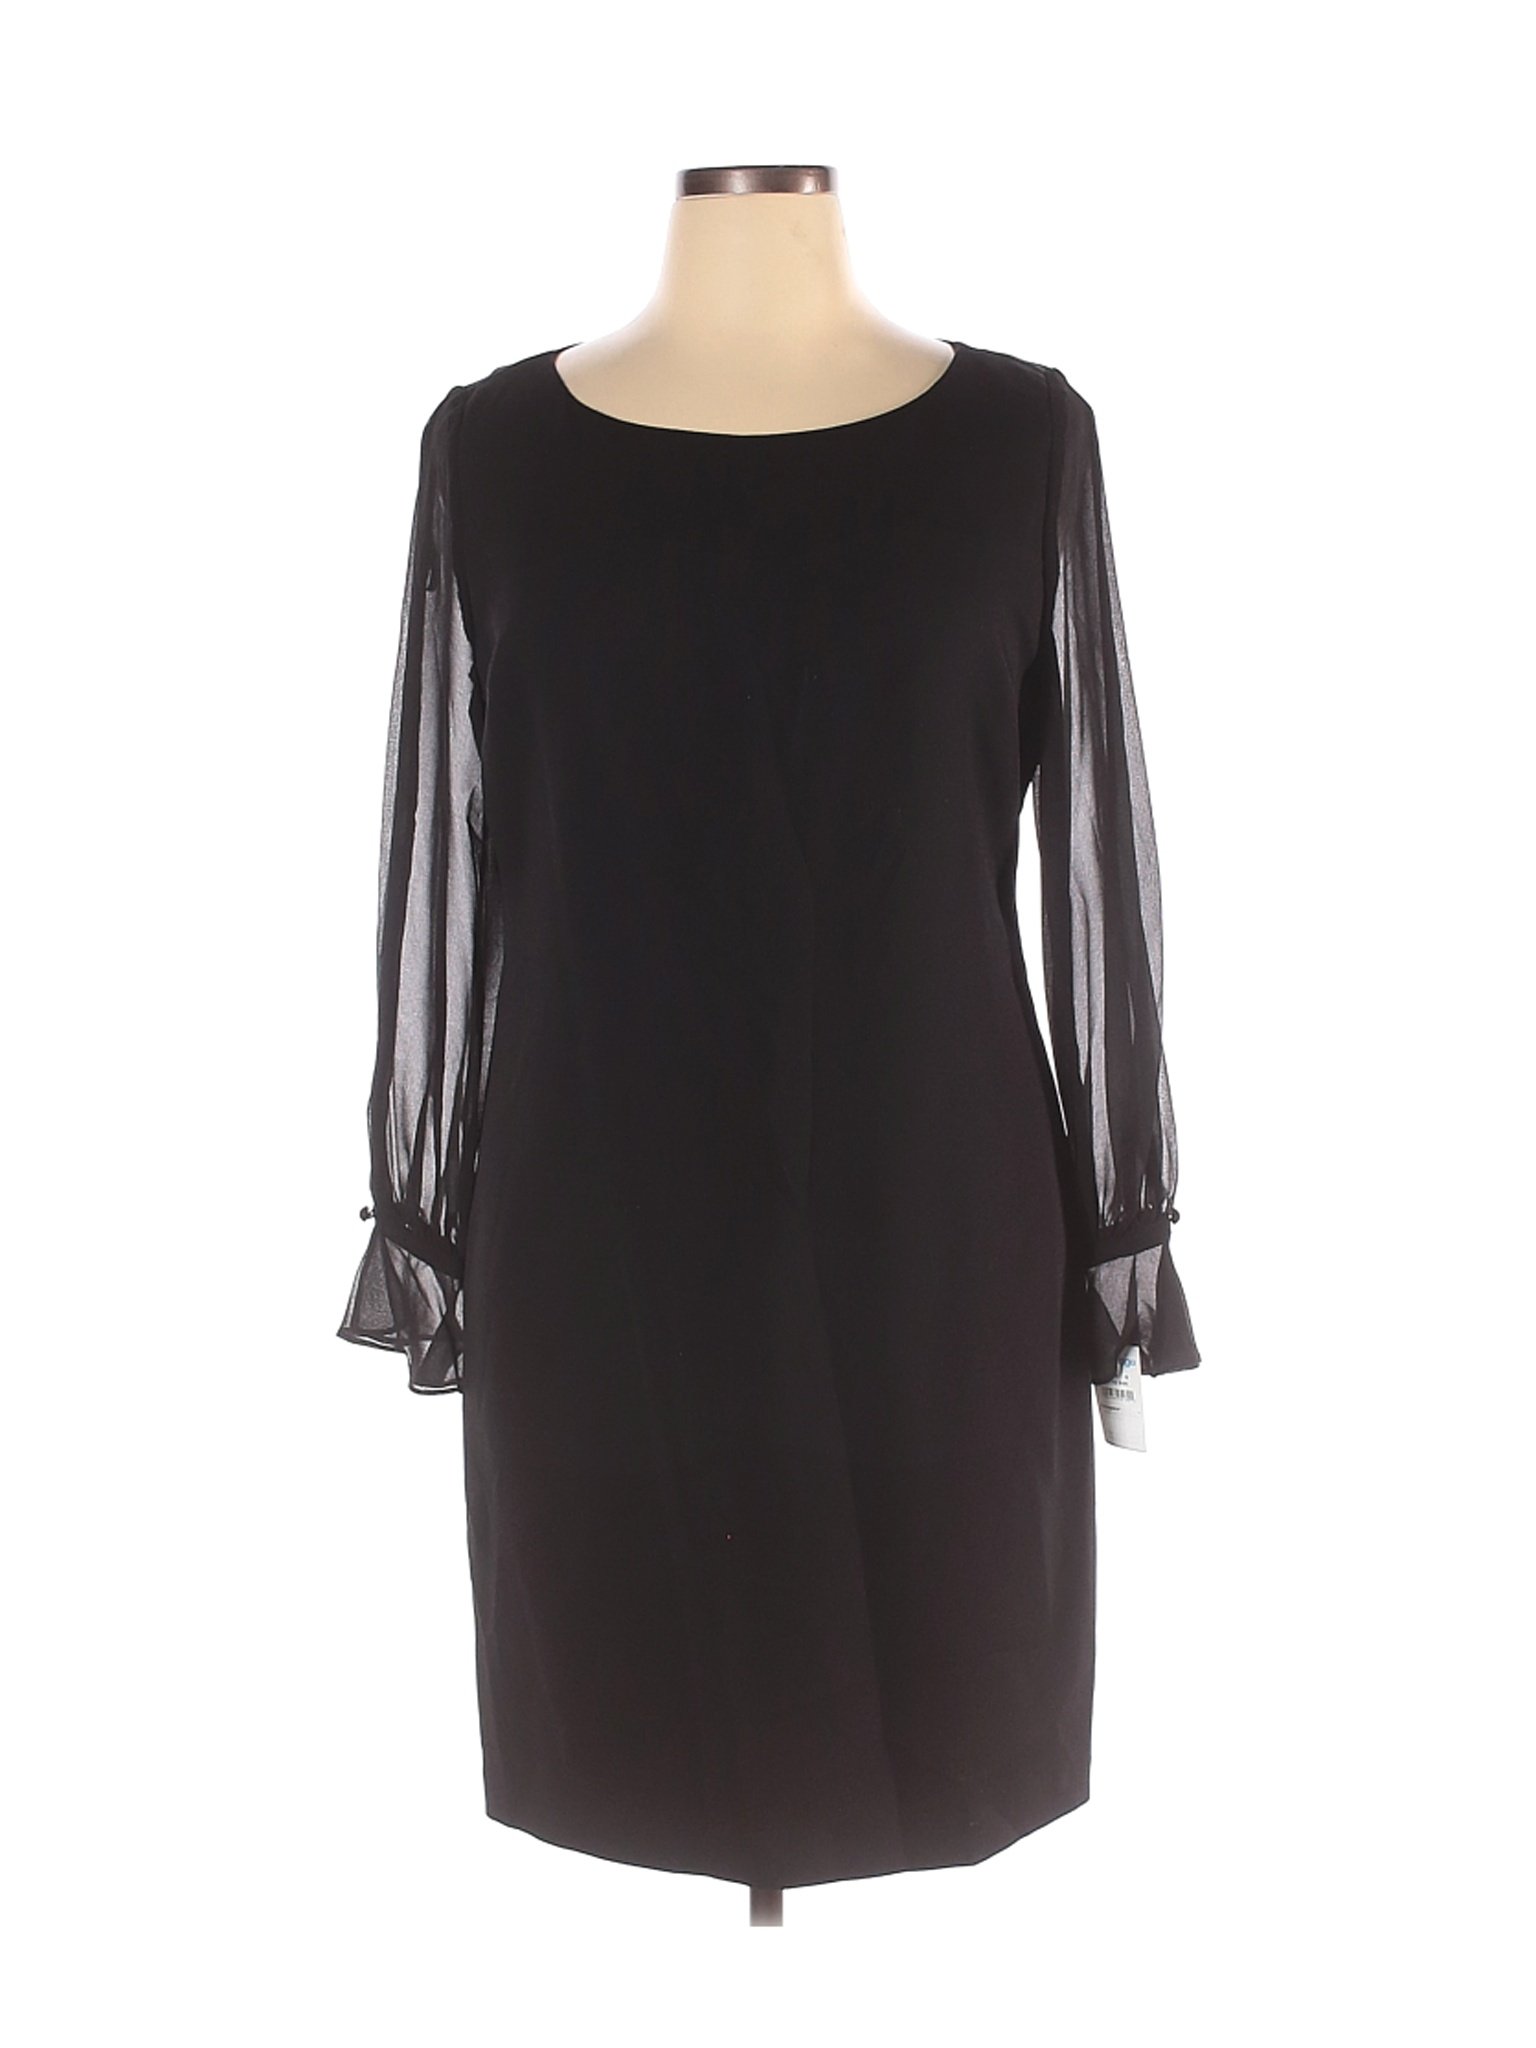 Karl Lagerfeld Paris Women Black Casual Dress 16 | eBay